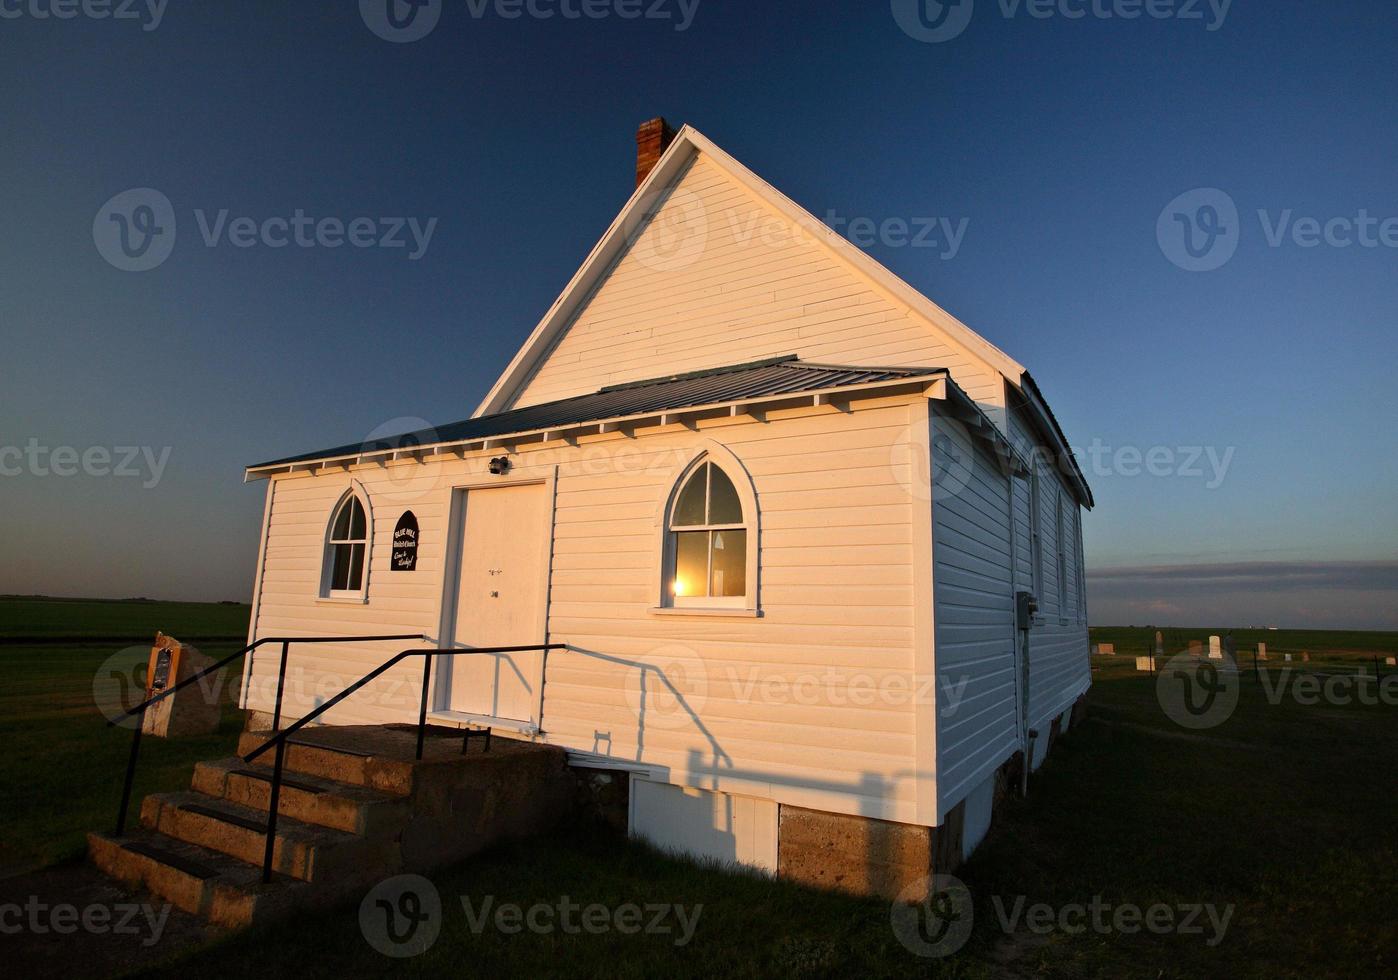 Blue Hill country church in scenic Saskatchewan photo